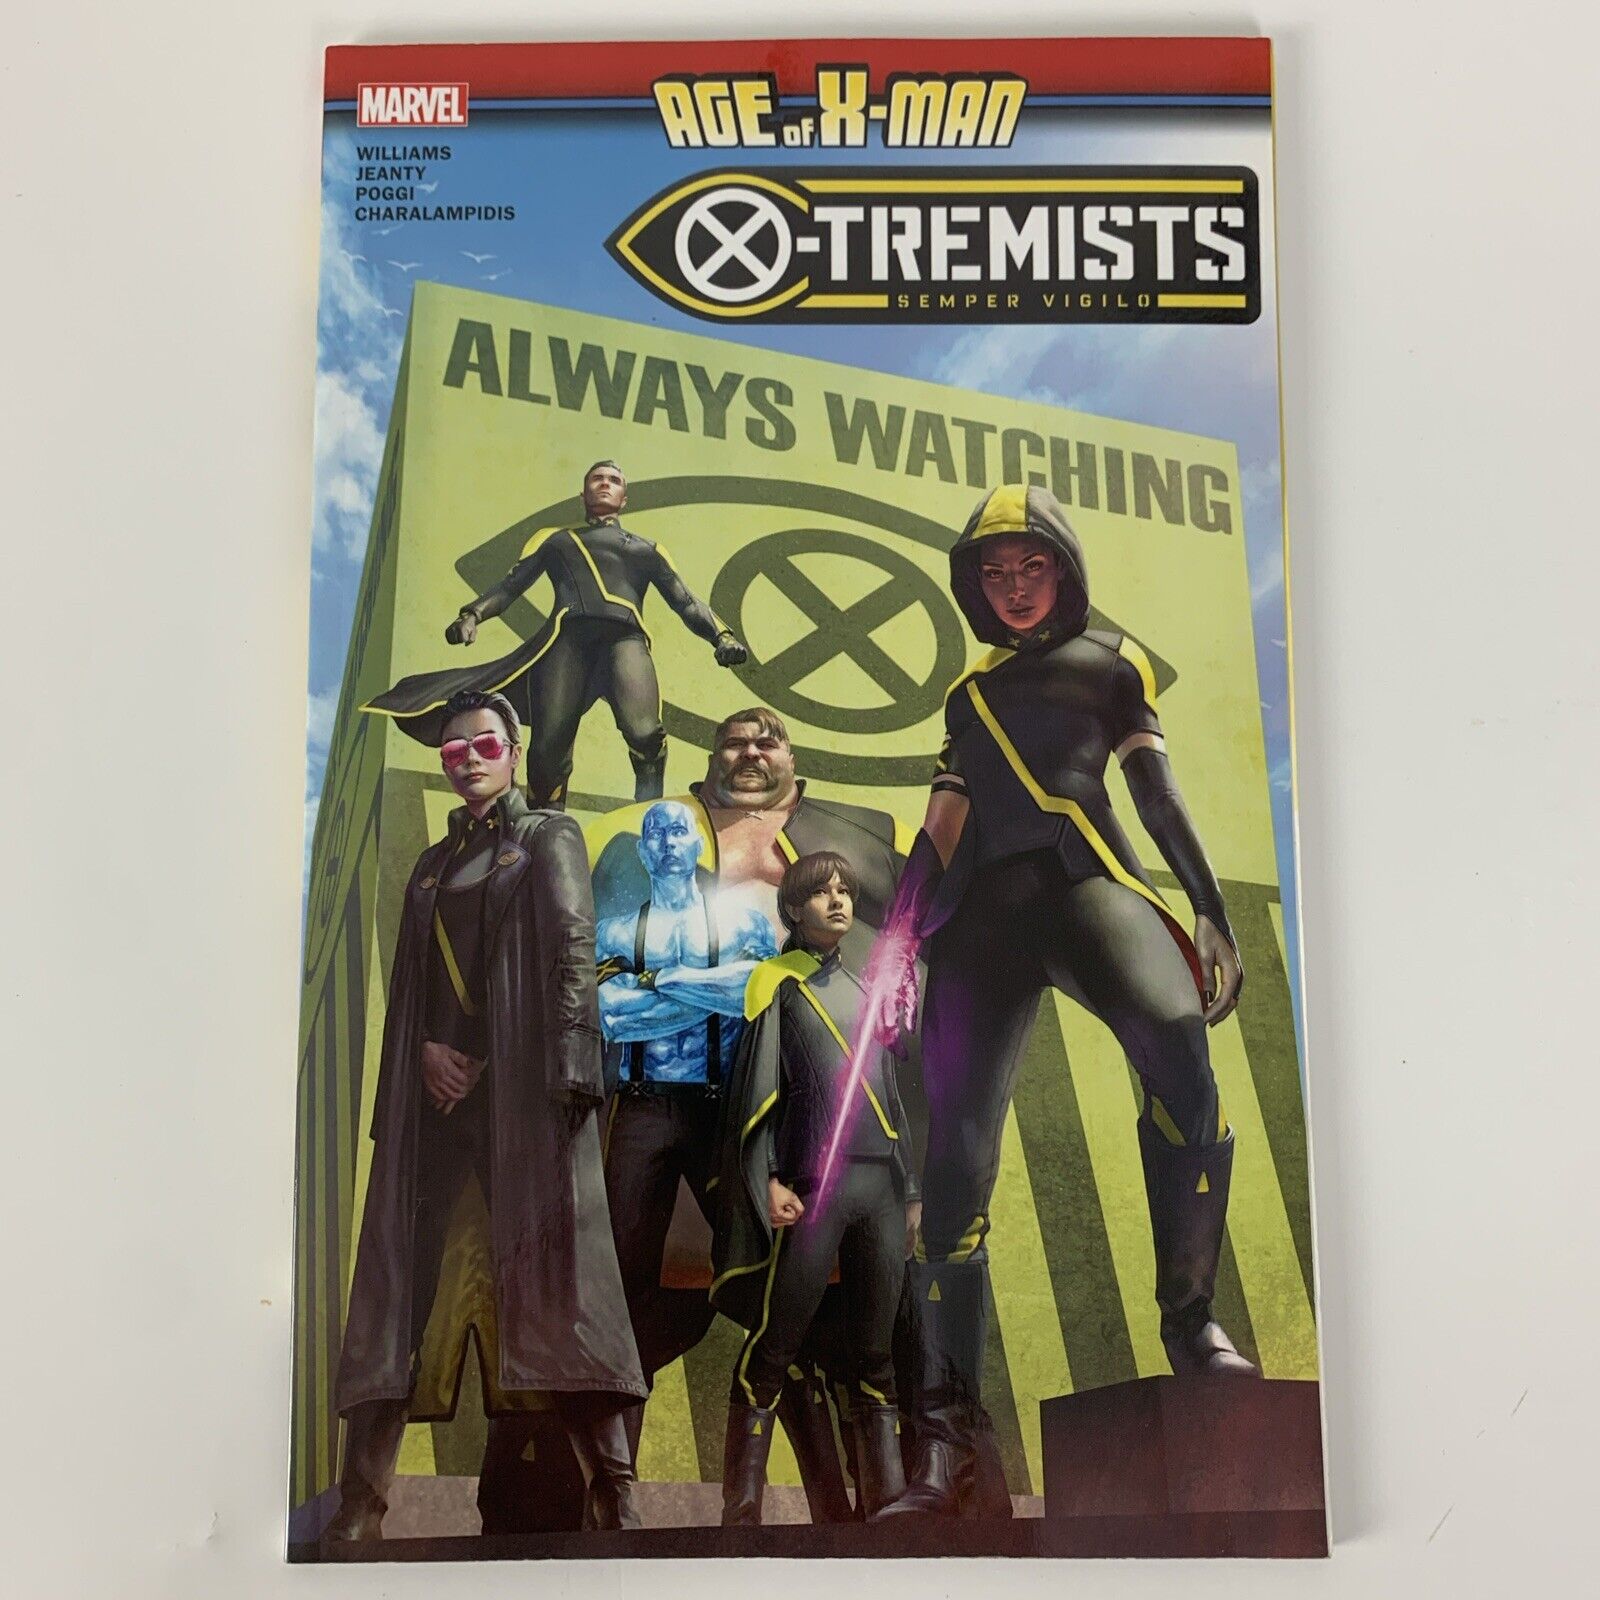 Age of X-Man: X-Tremists (Marvel Comics, Trade Paperback, 2019)